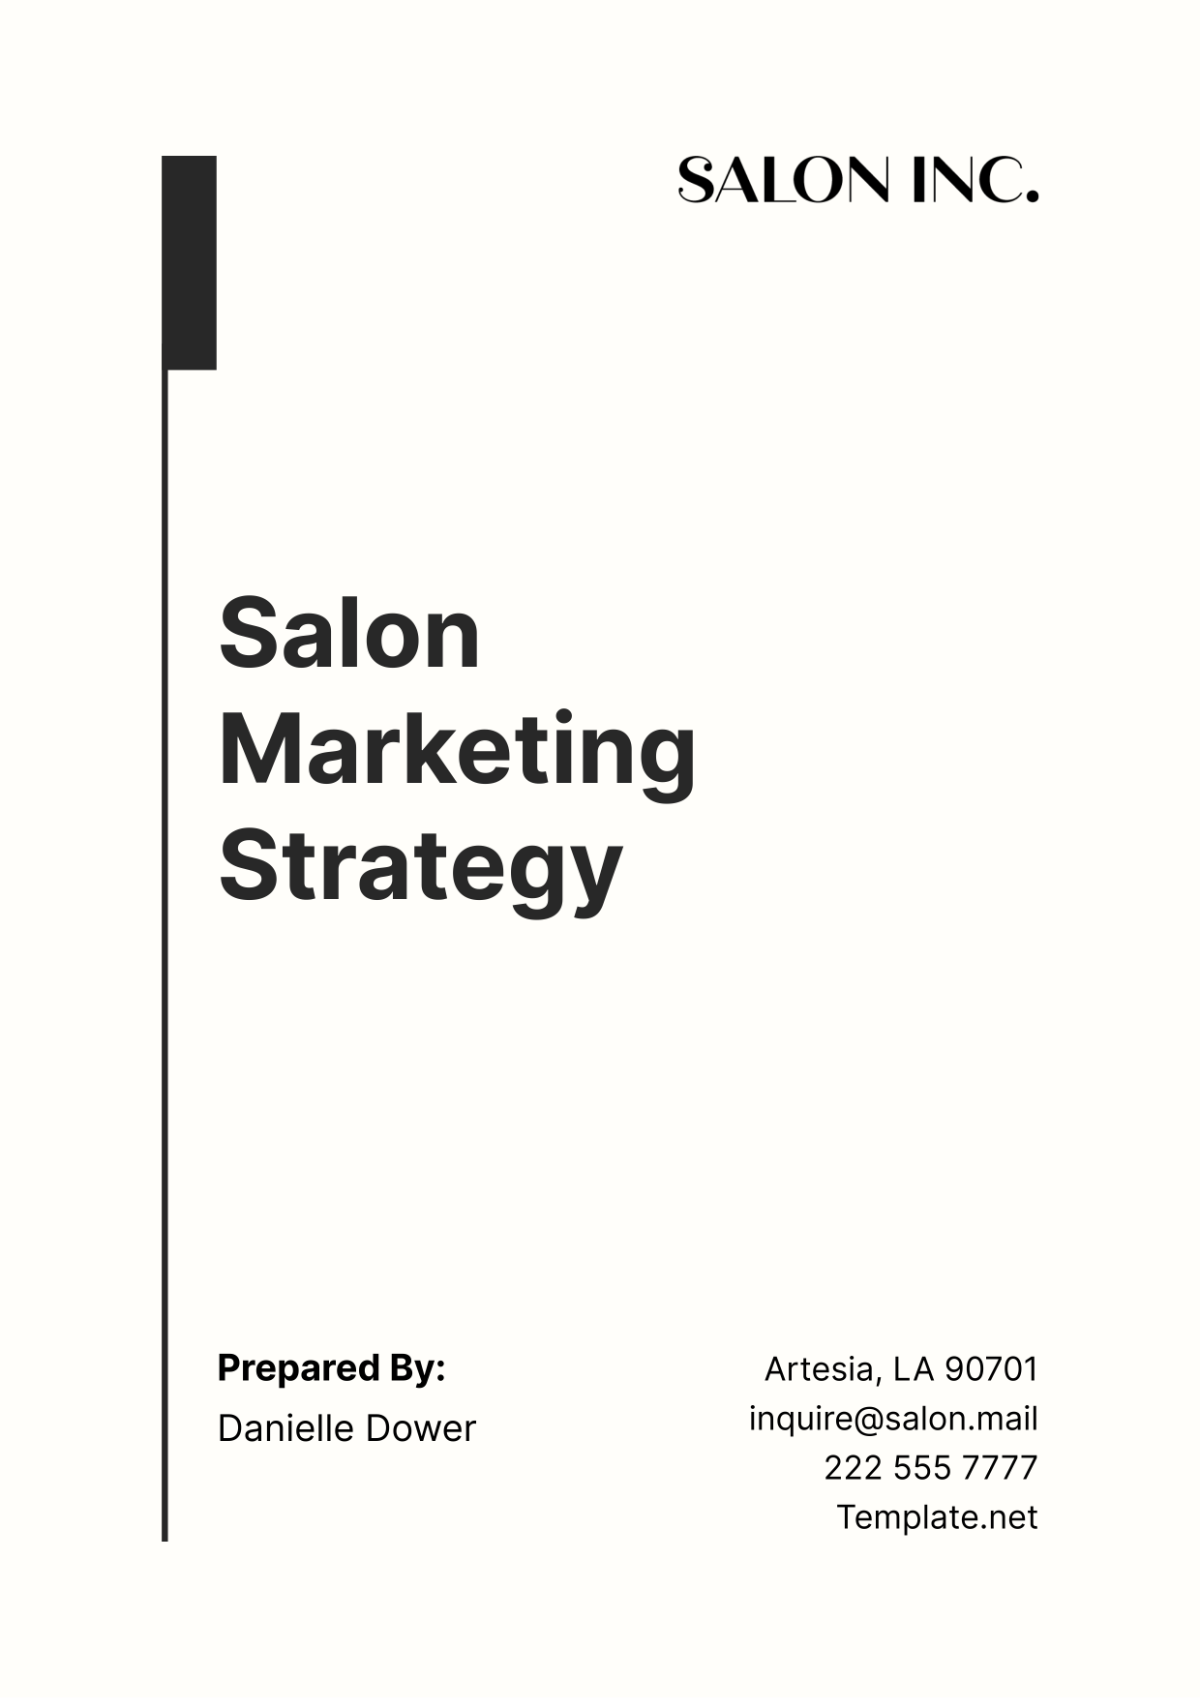 Salon Marketing Strategy Template